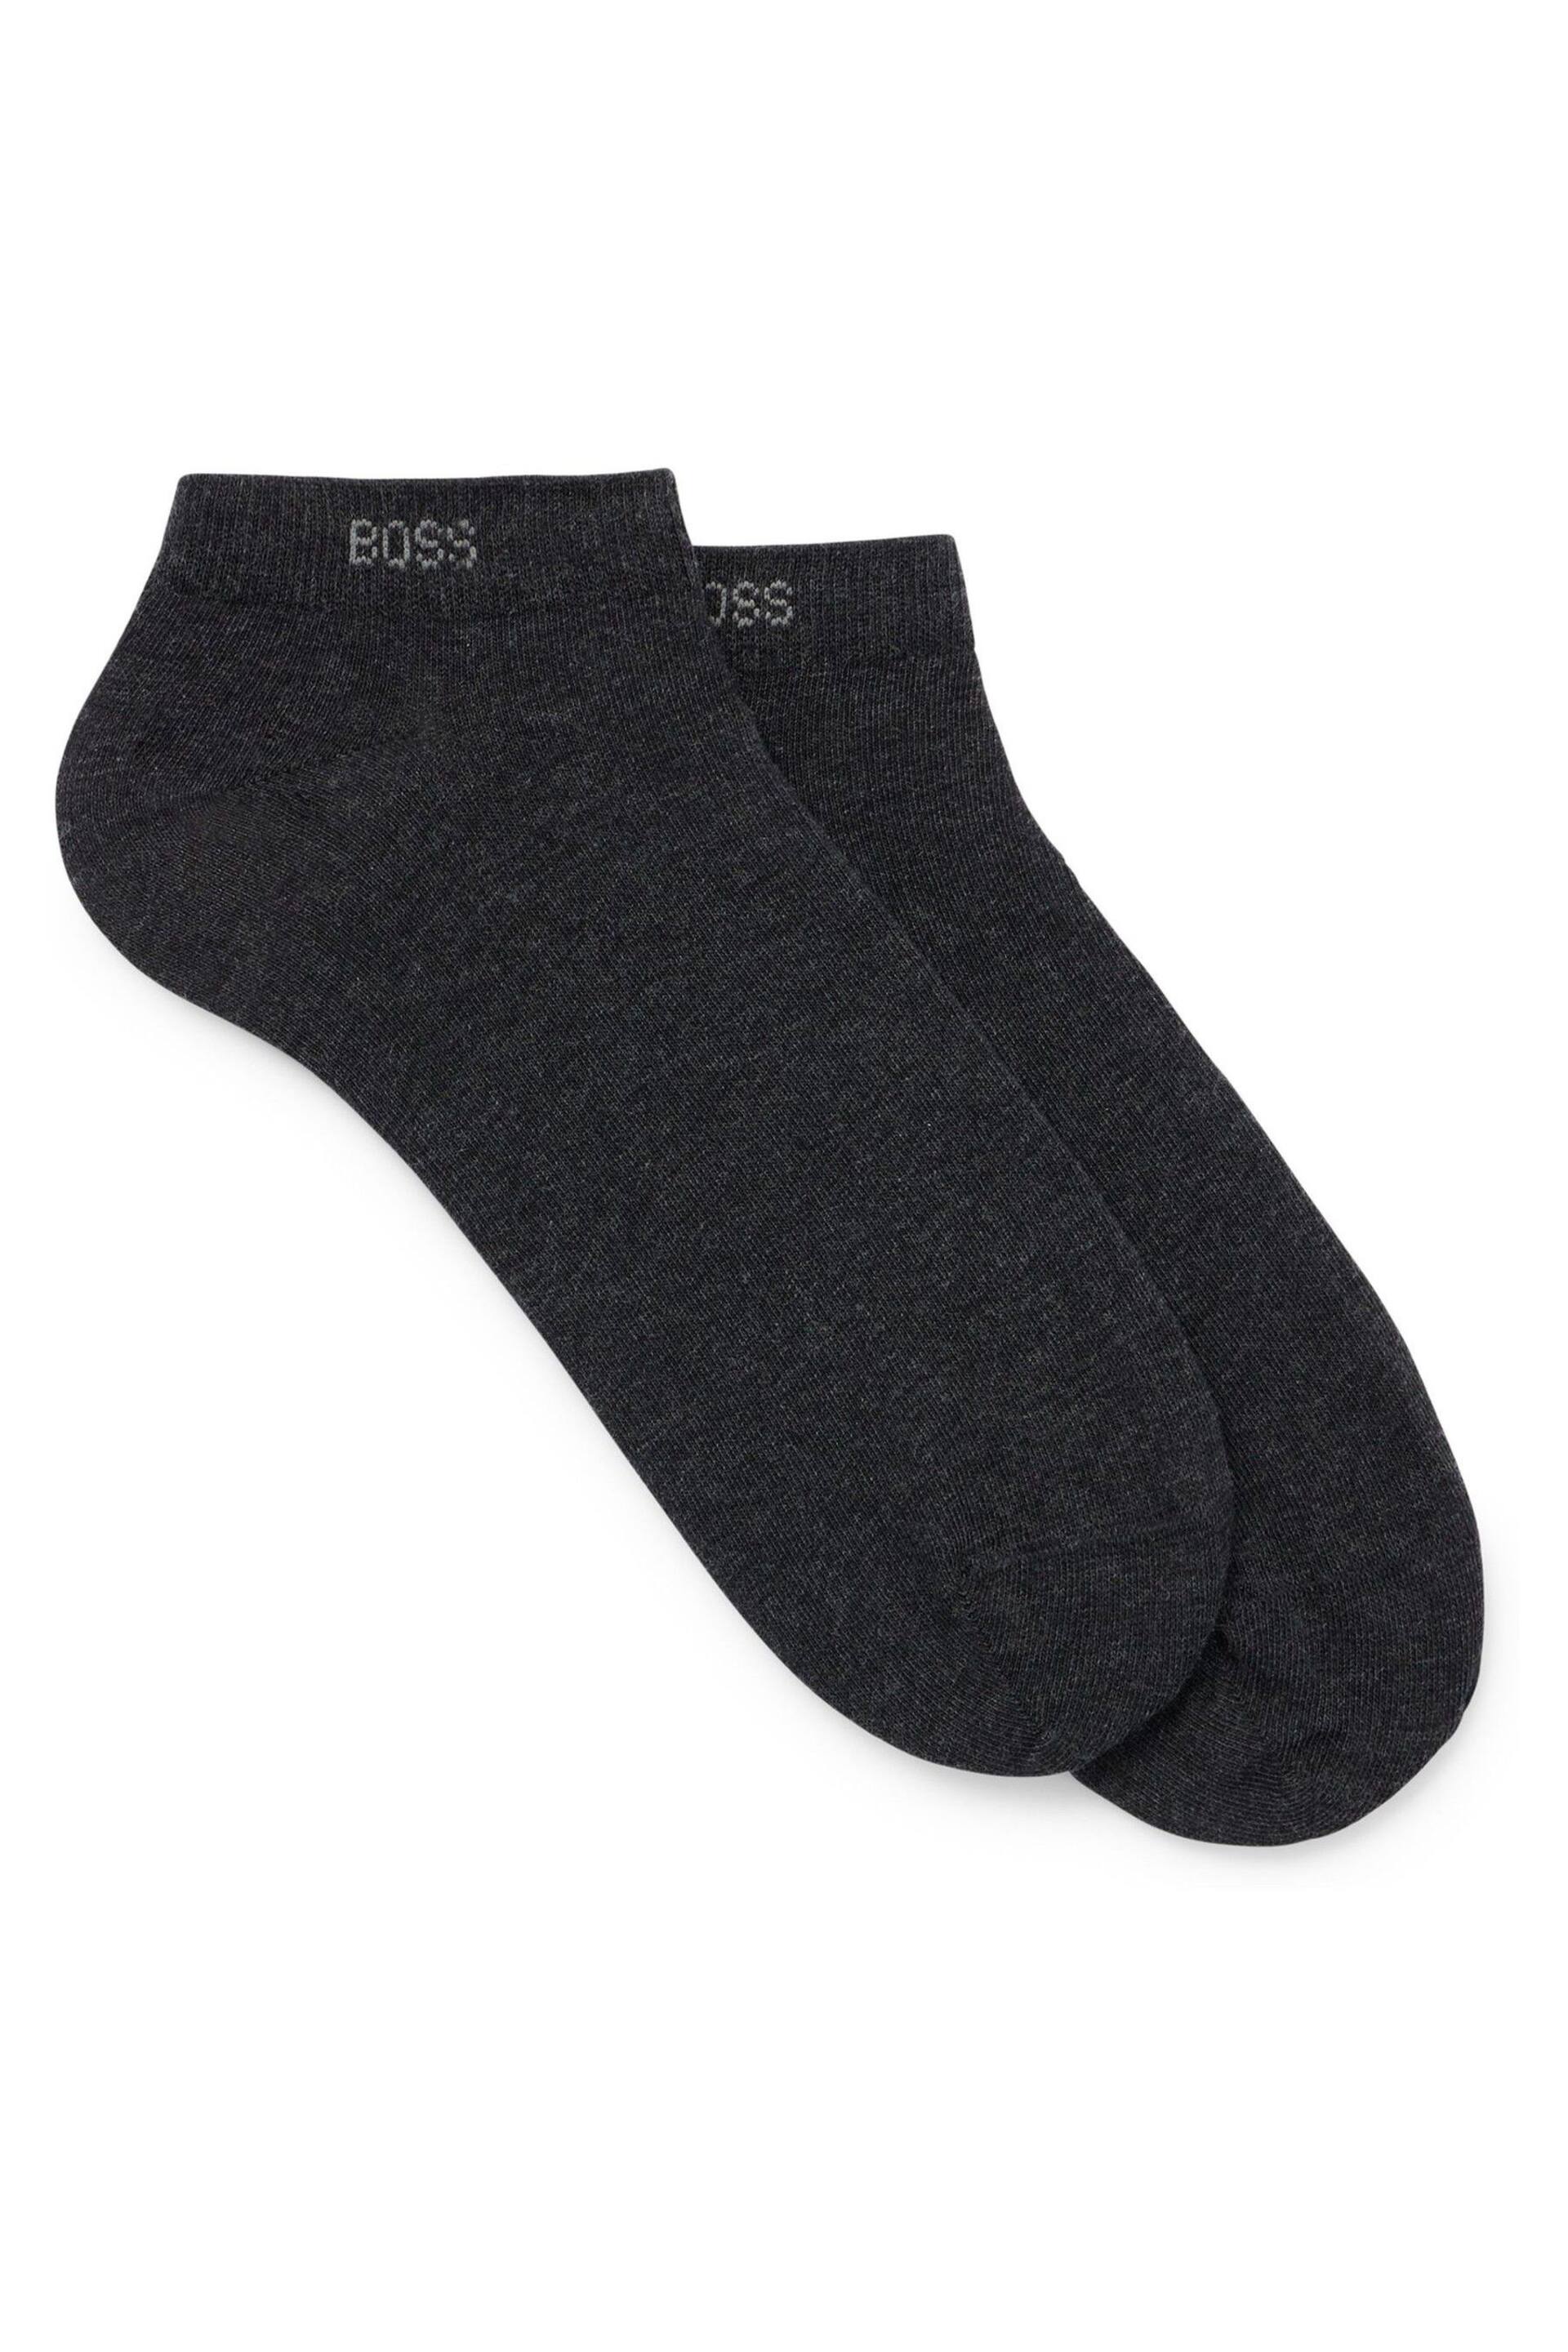 BOSS Dark Grey Ankle Socks 2 Pack - Image 1 of 3